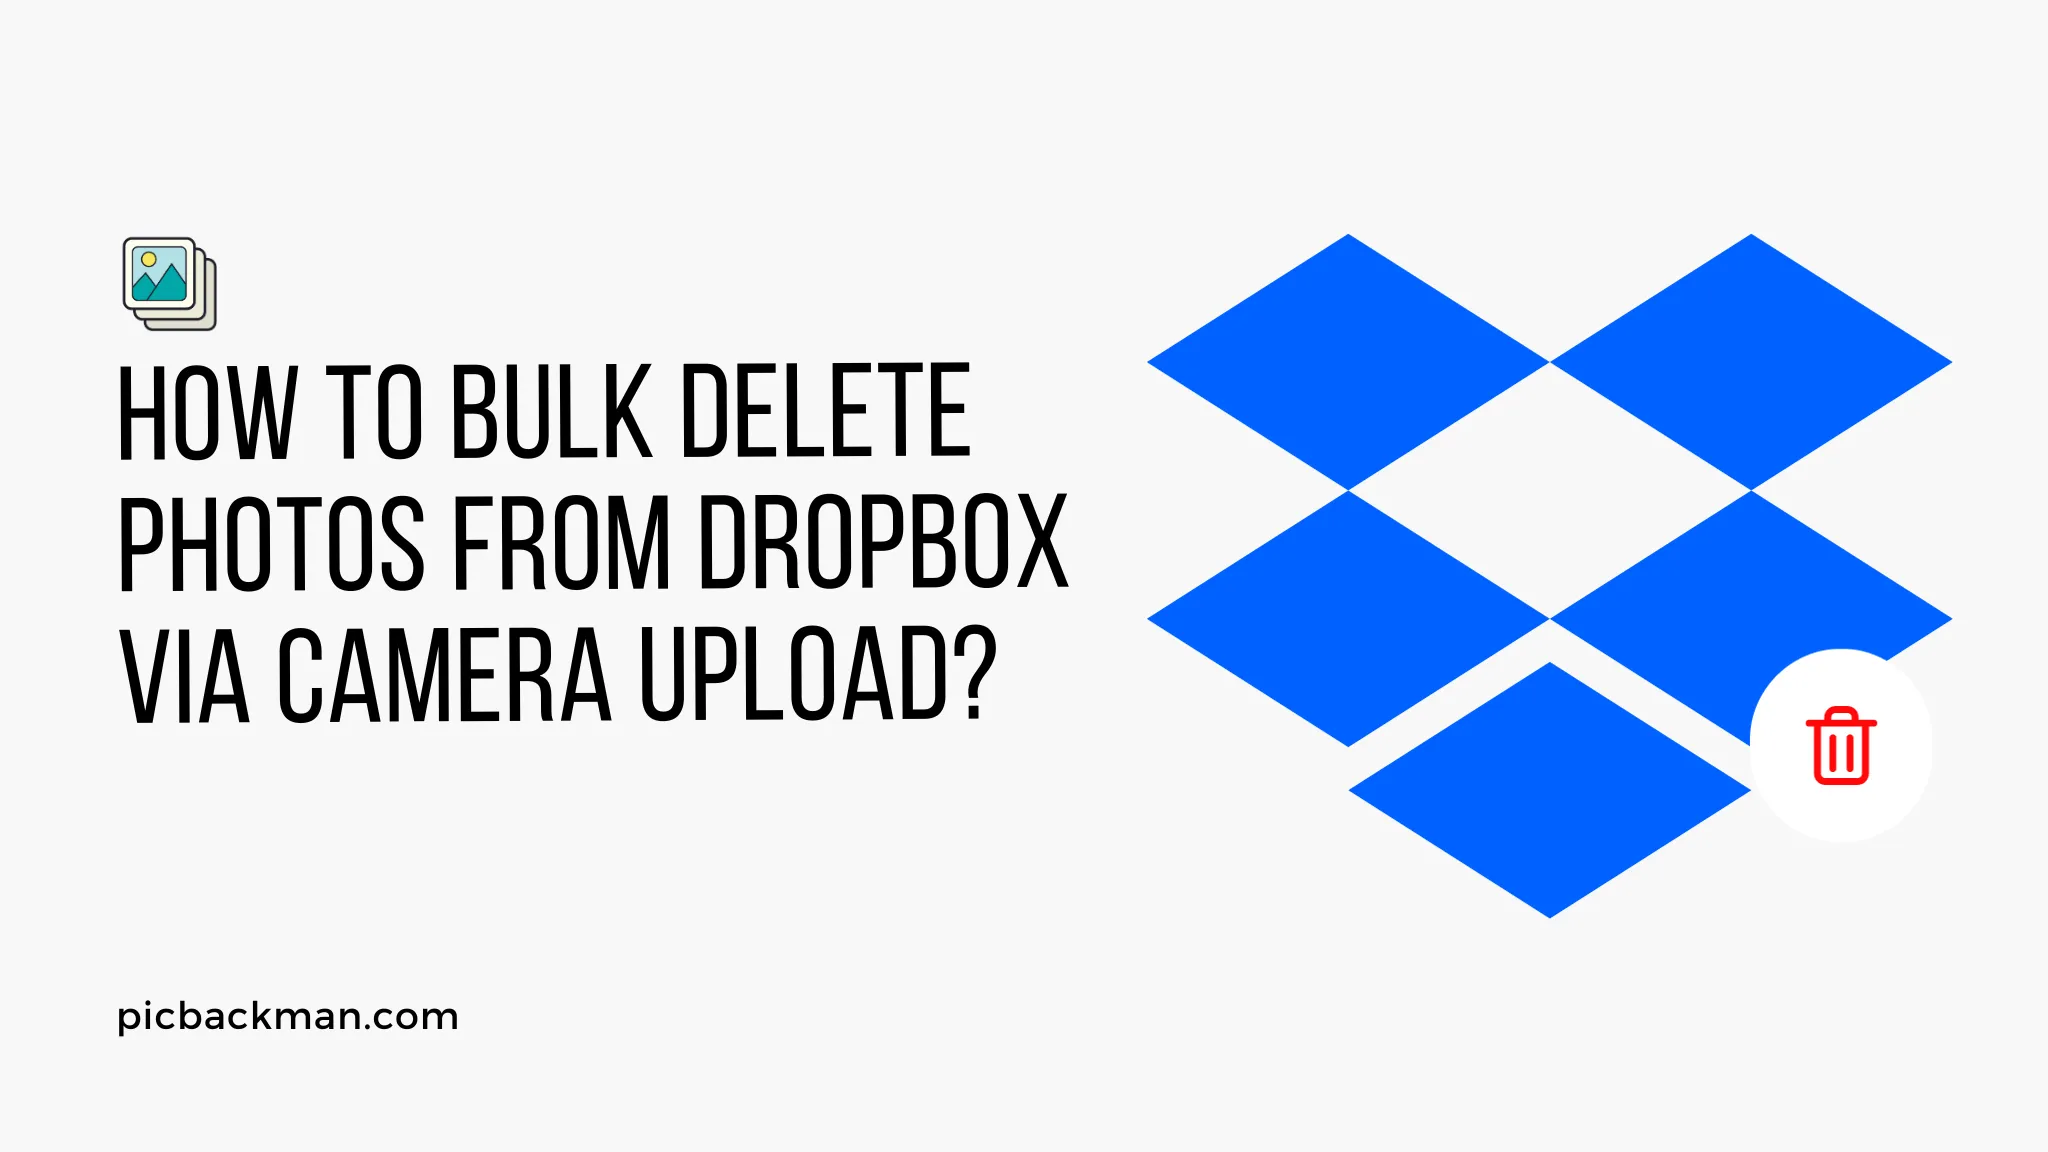 How to Bulk Delete Photos from Dropbox via Camera Upload?